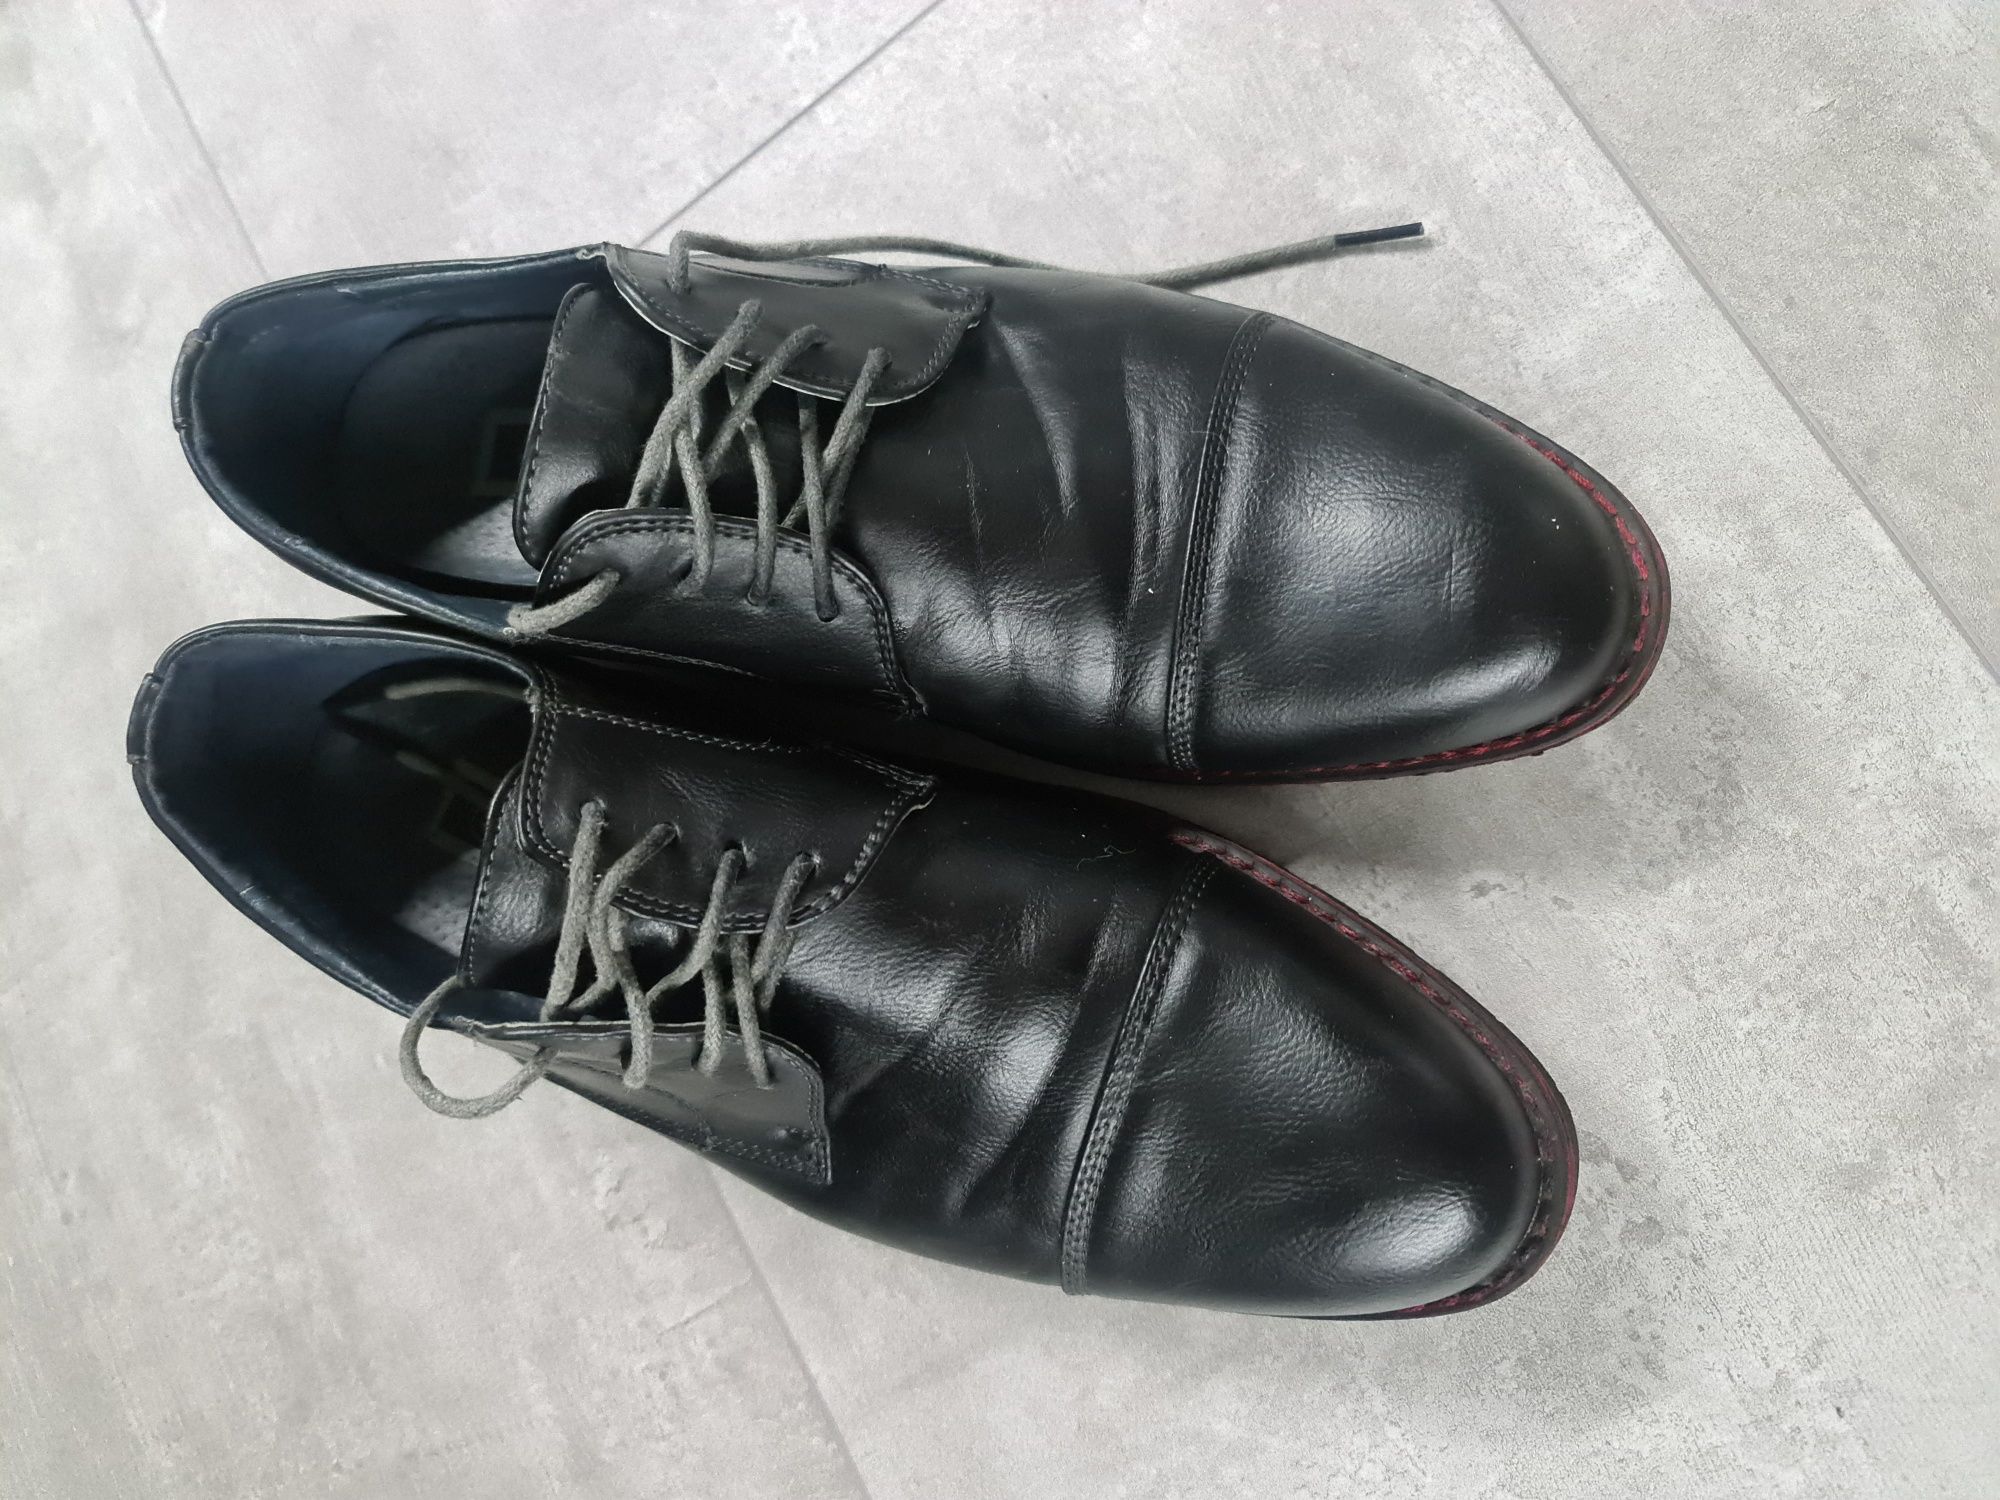 Vapiano pantofle męskie czarne r. 42 wkładka 29 cm